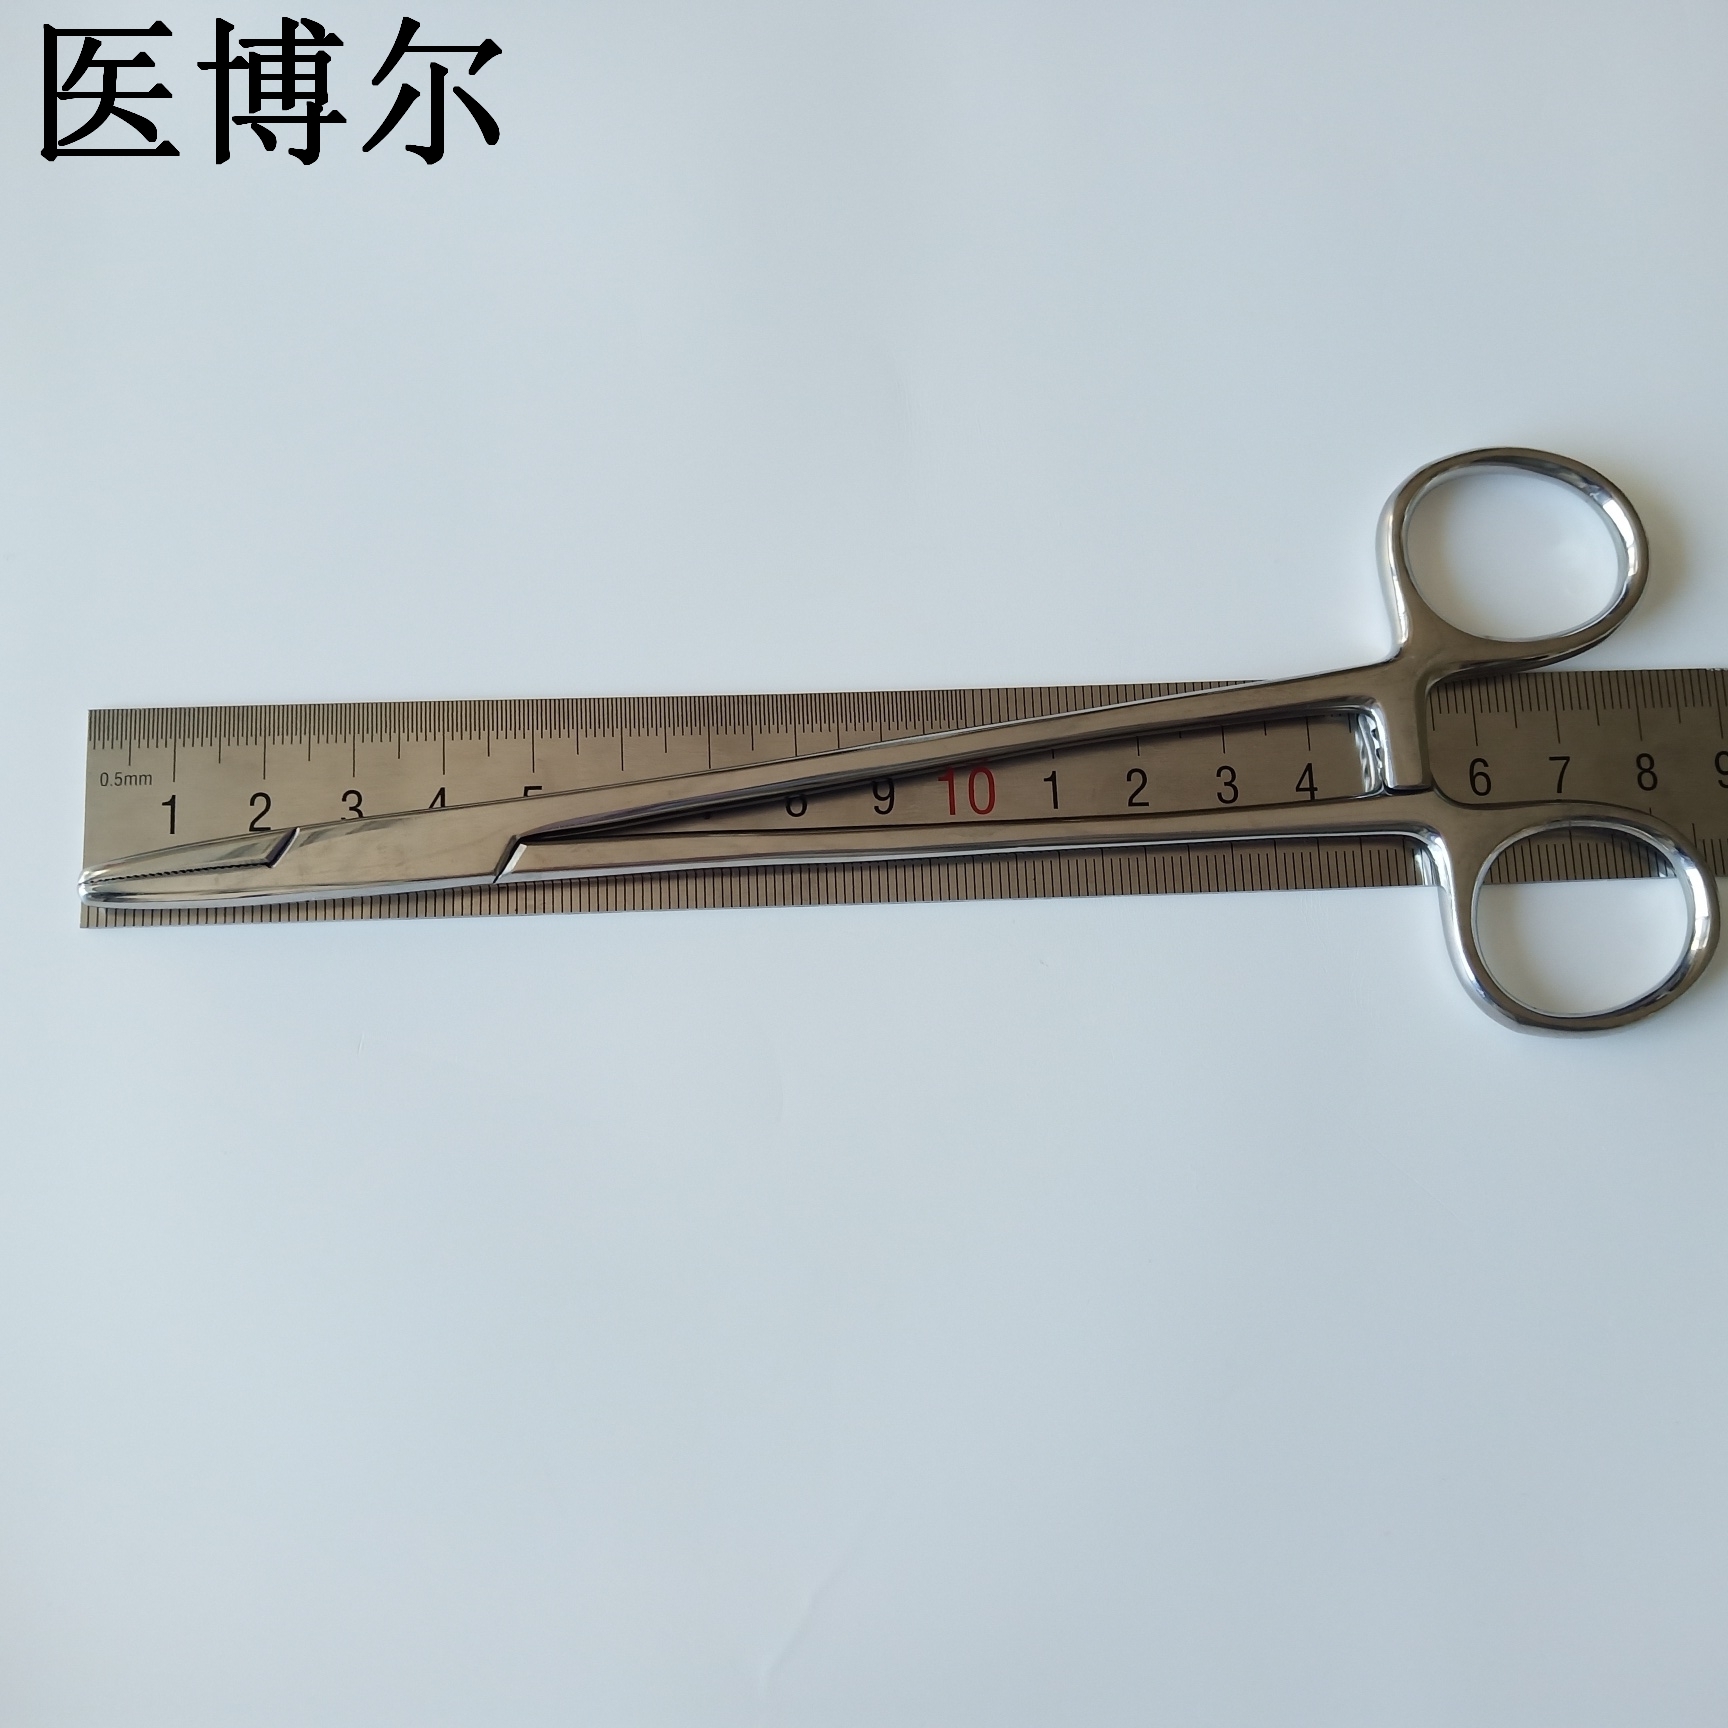 18cm粗针持针器 (1).jpg